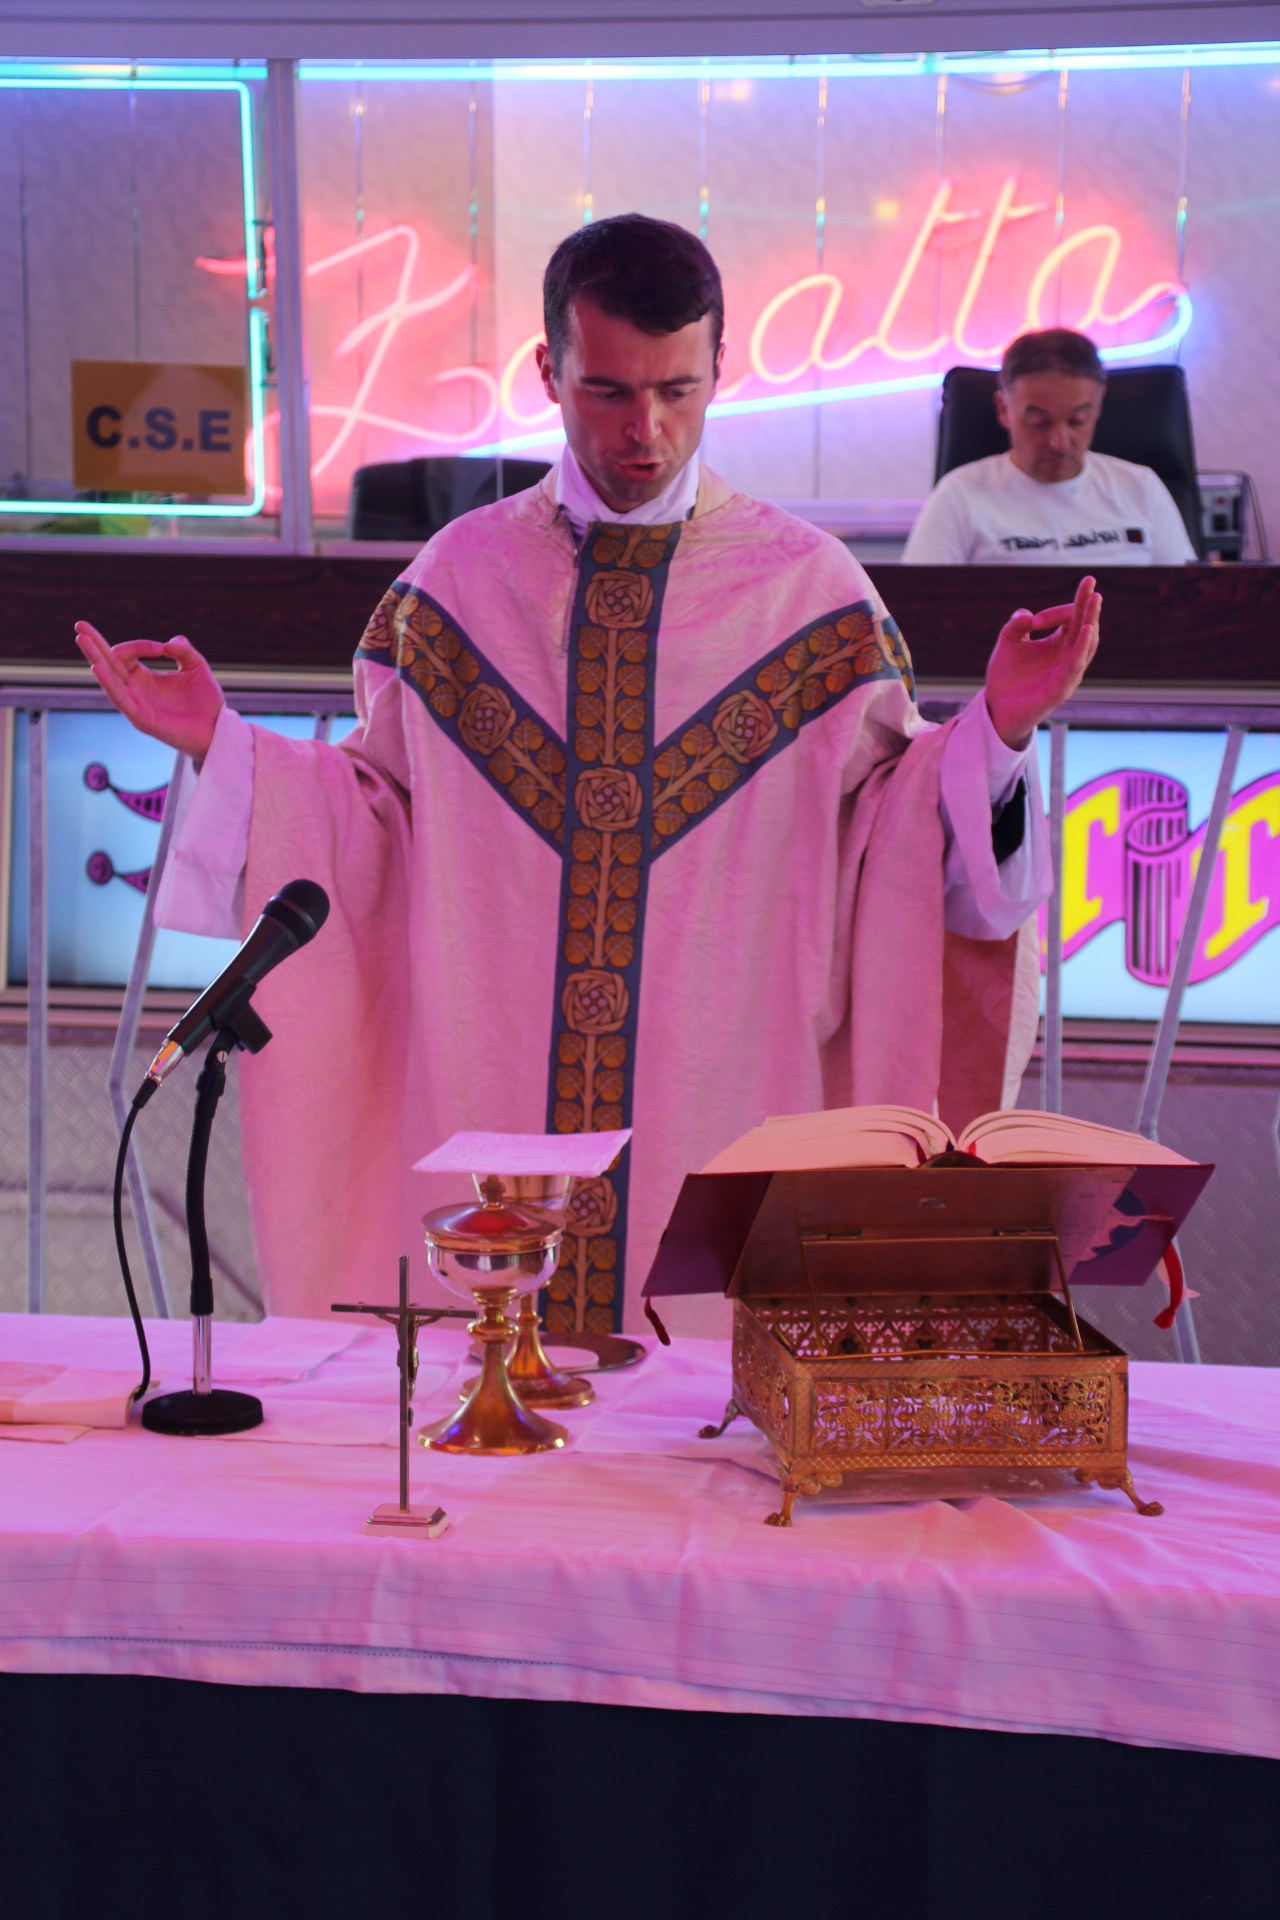 Prière eucharistique